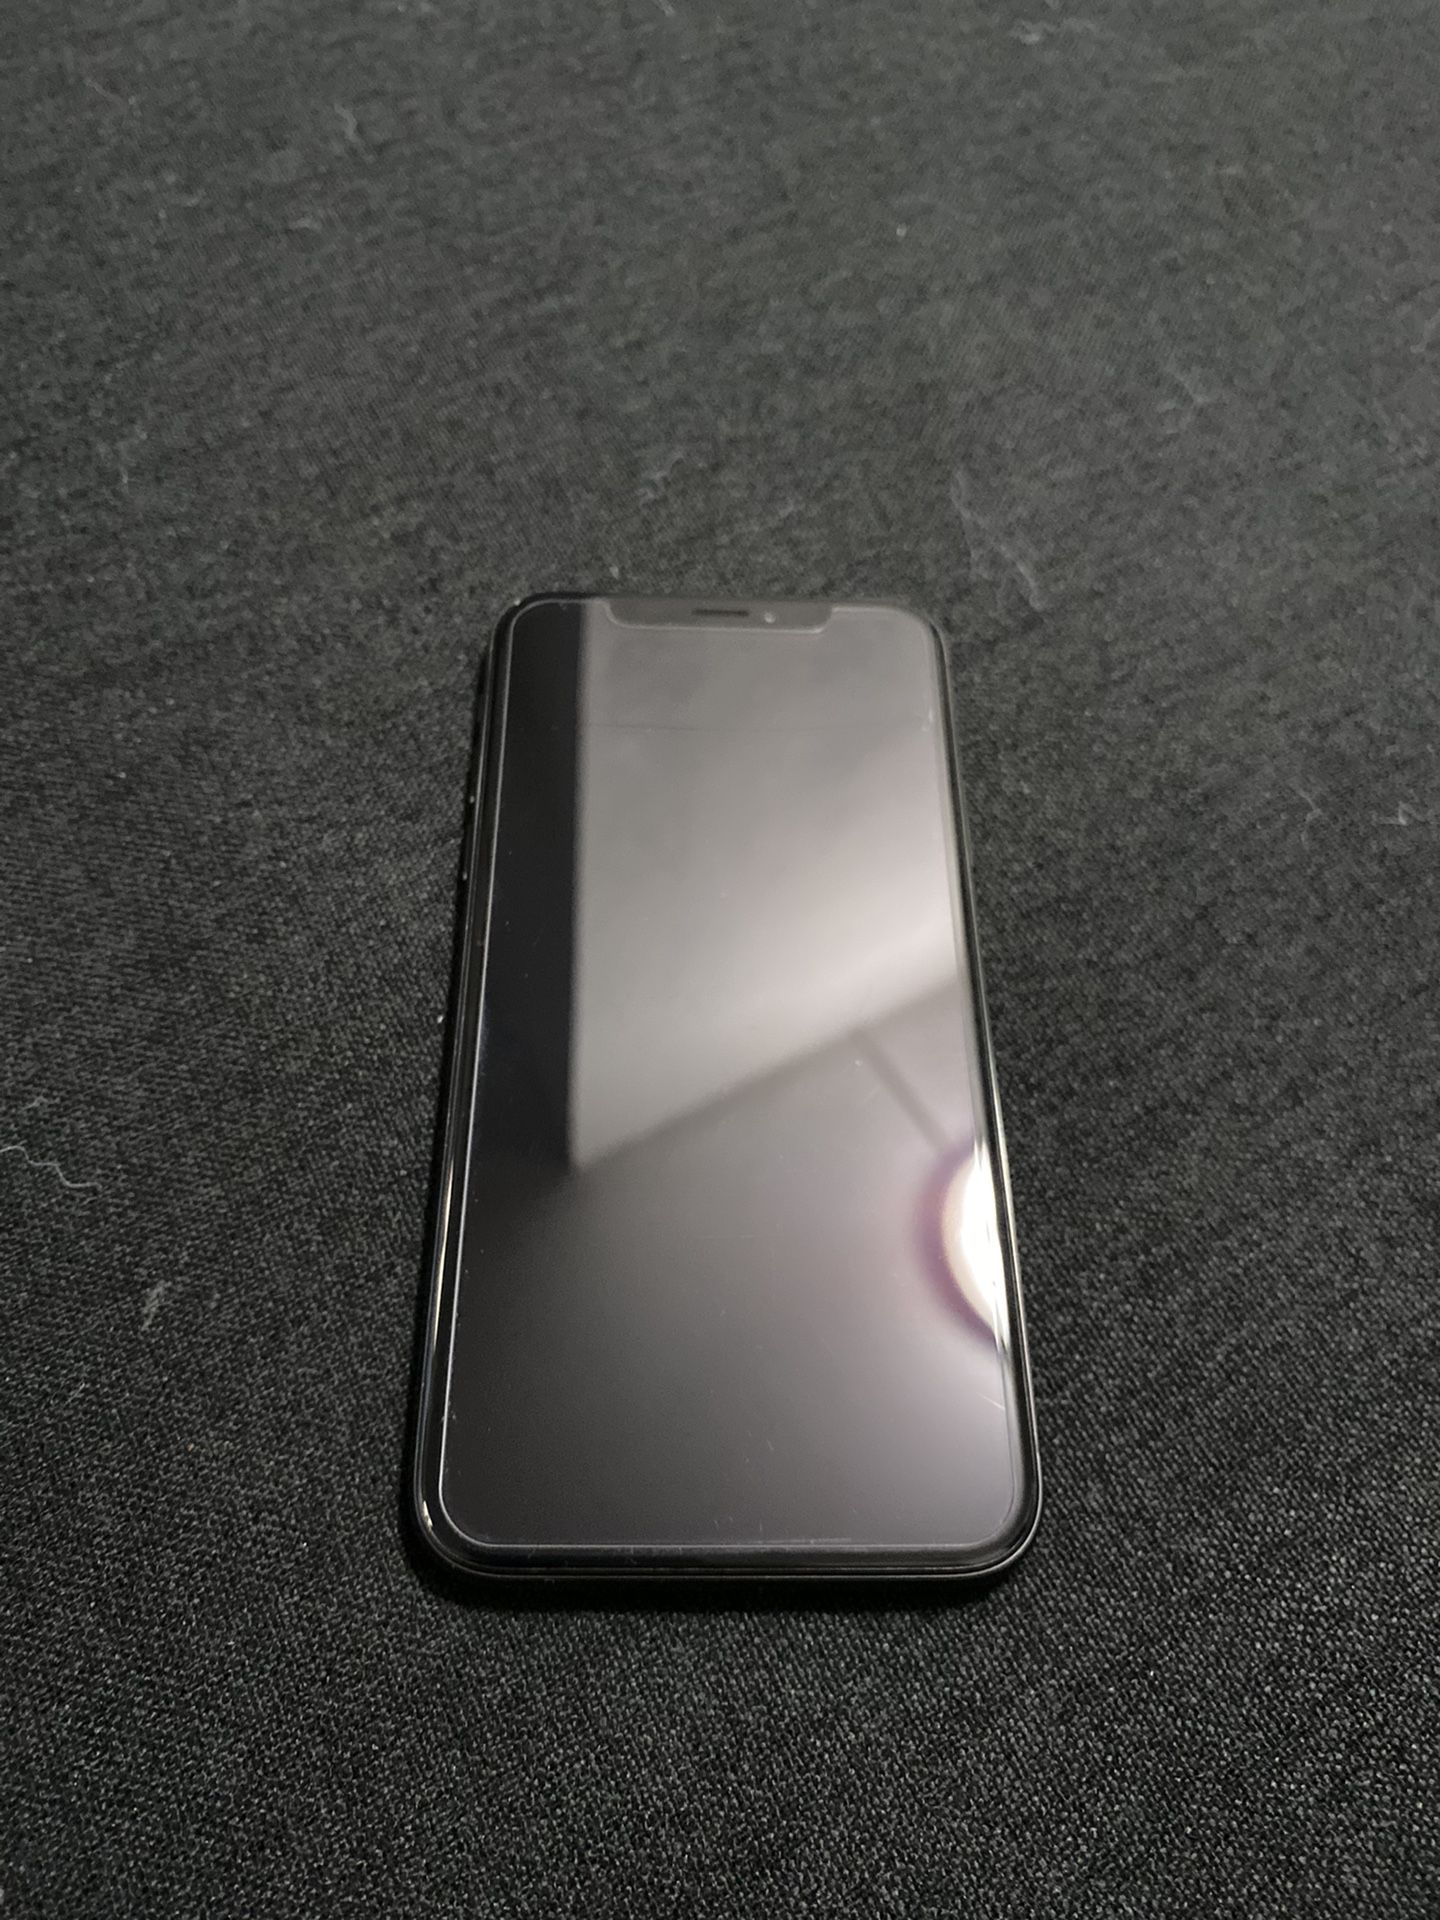 iPhone X 256GB Space Grey (UNLOCKED)